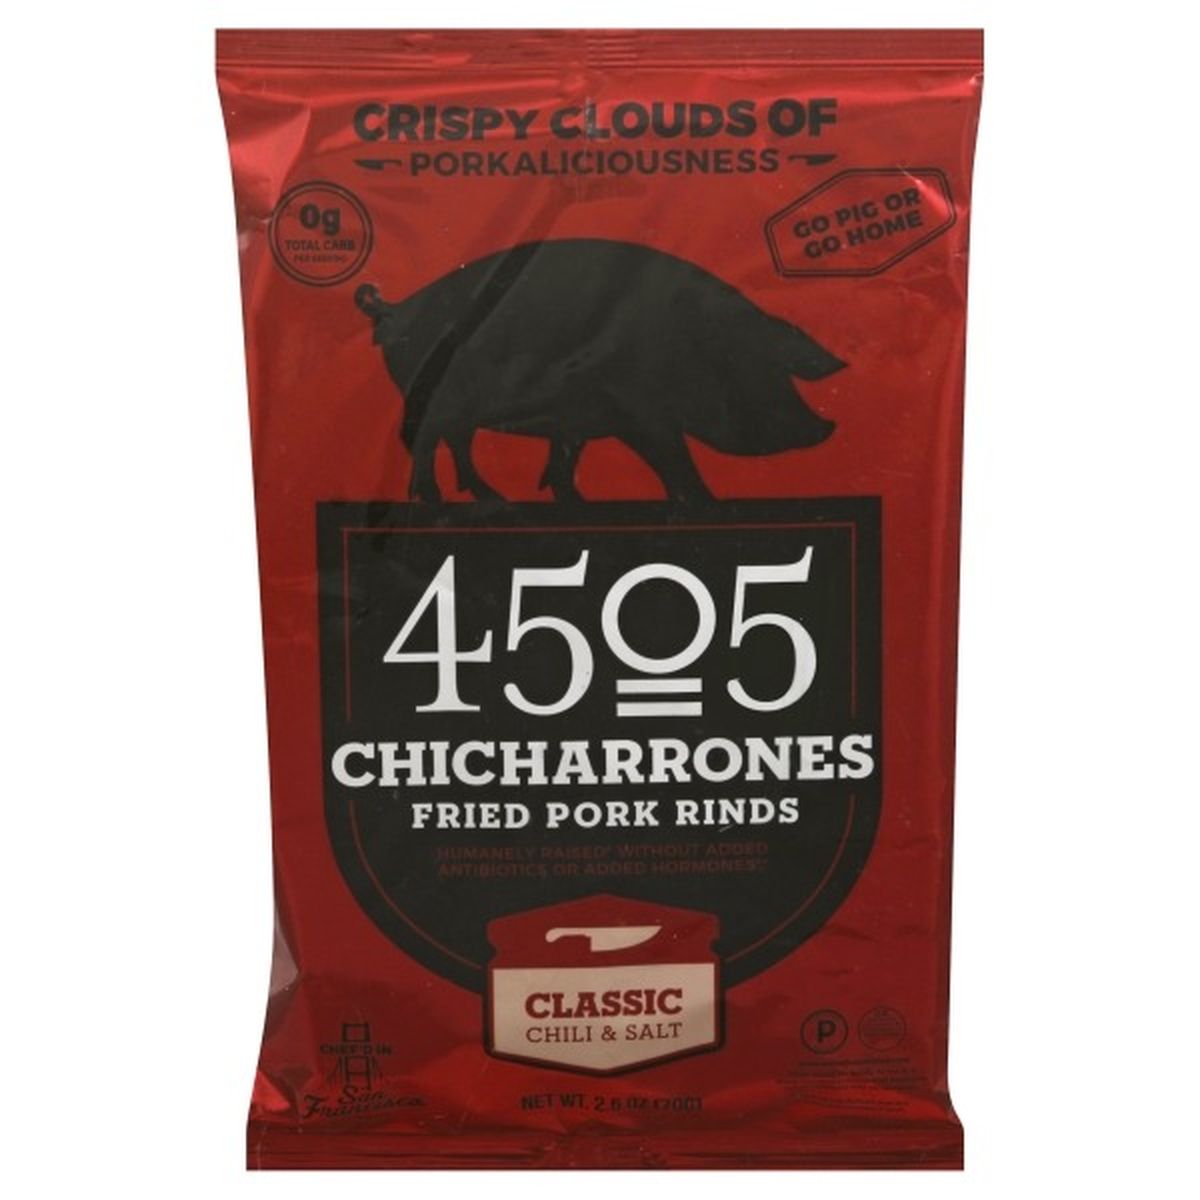 Calories in 4505 Meats Fried Pork Rinds, Classic Chili & Salt, Chicharrones